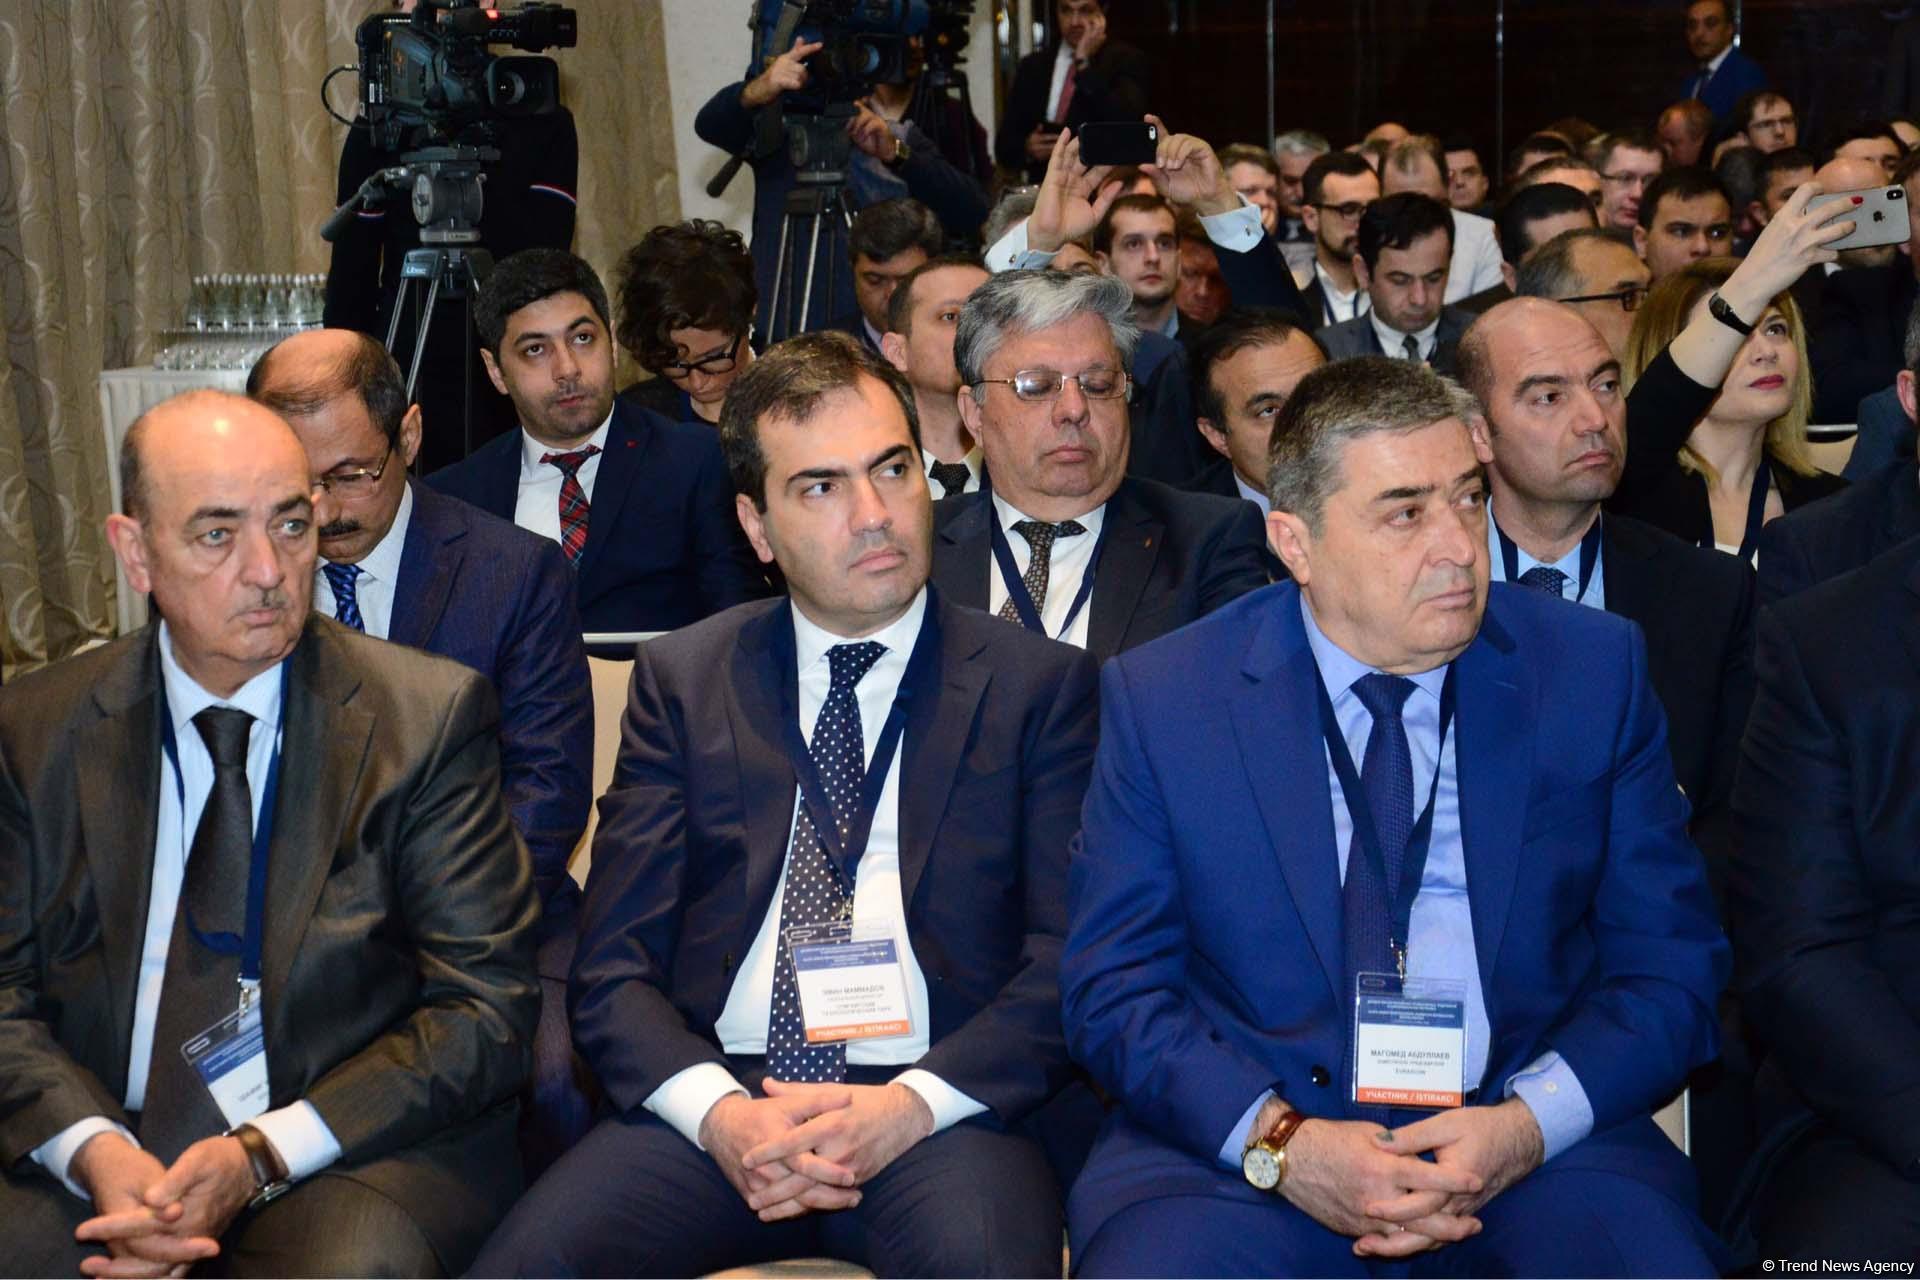 Российские инвестиции в Азербайджан превысили $4 млрд - министр (ФОТО)